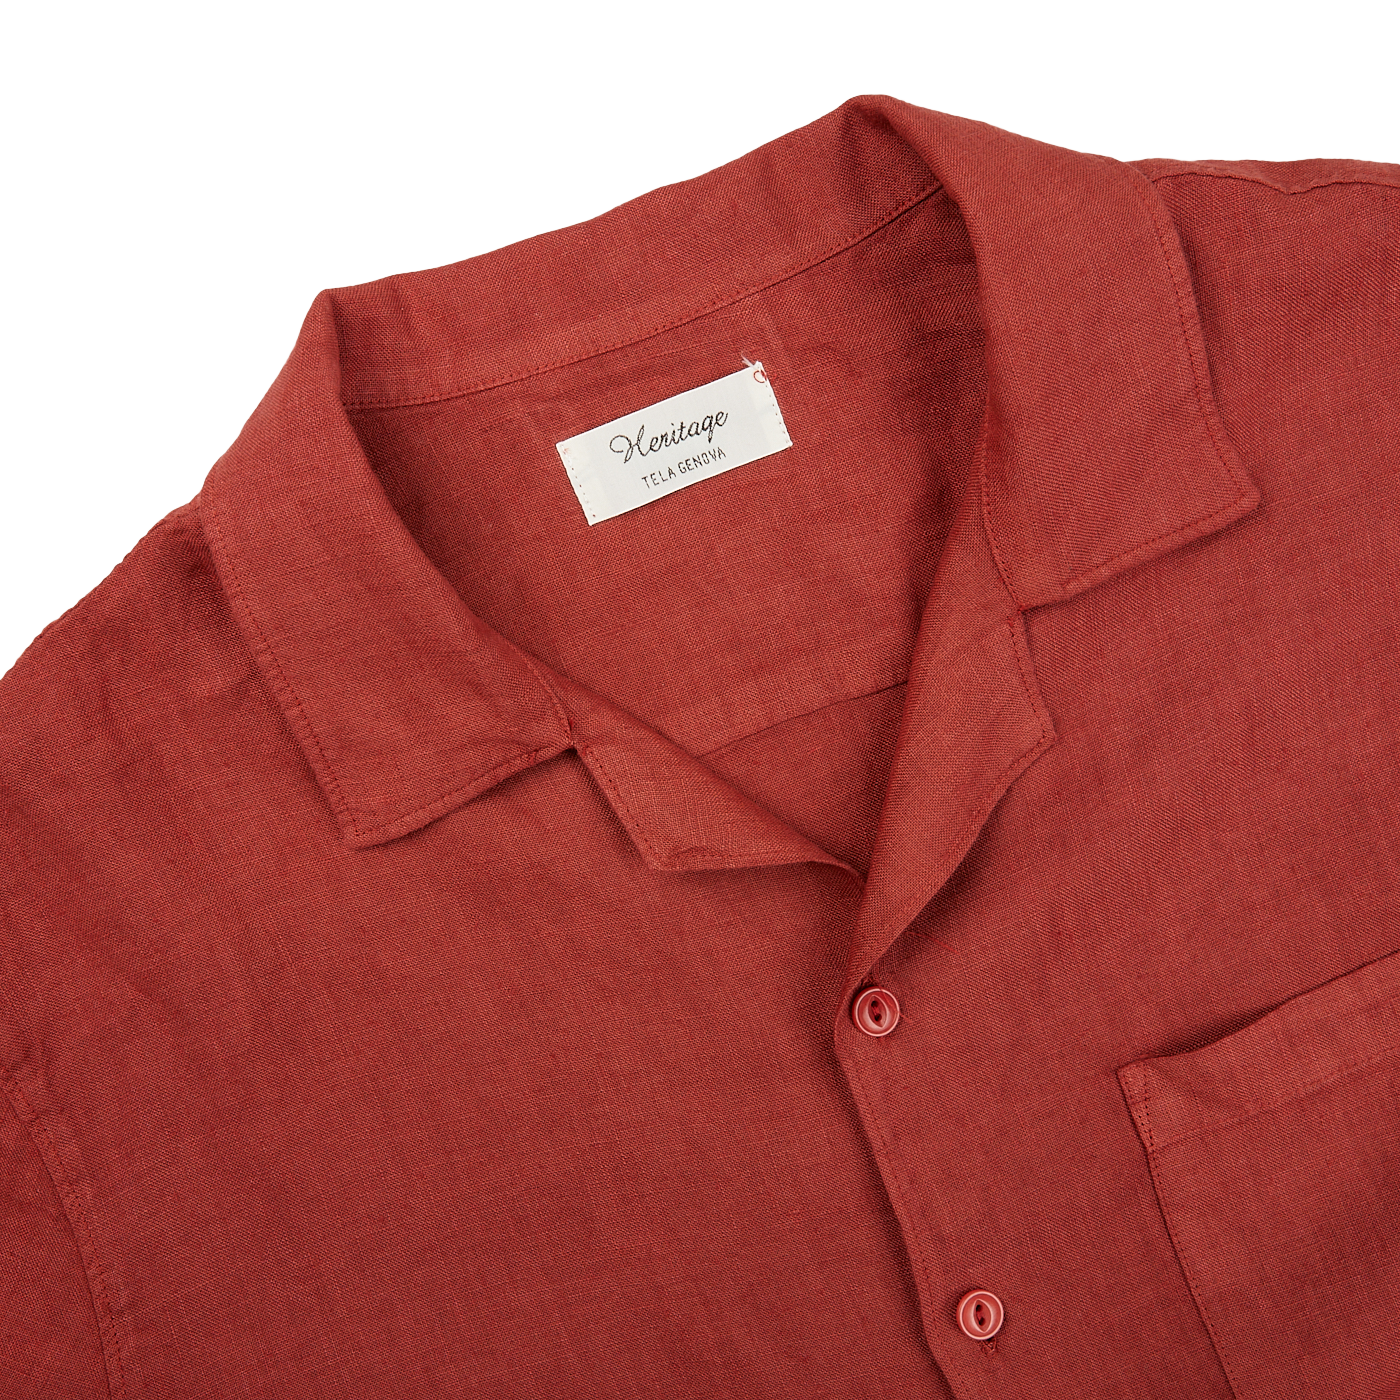 A Brick Red Renato Linen Camp Collar Shirt from Tela Genova for a summer feel.